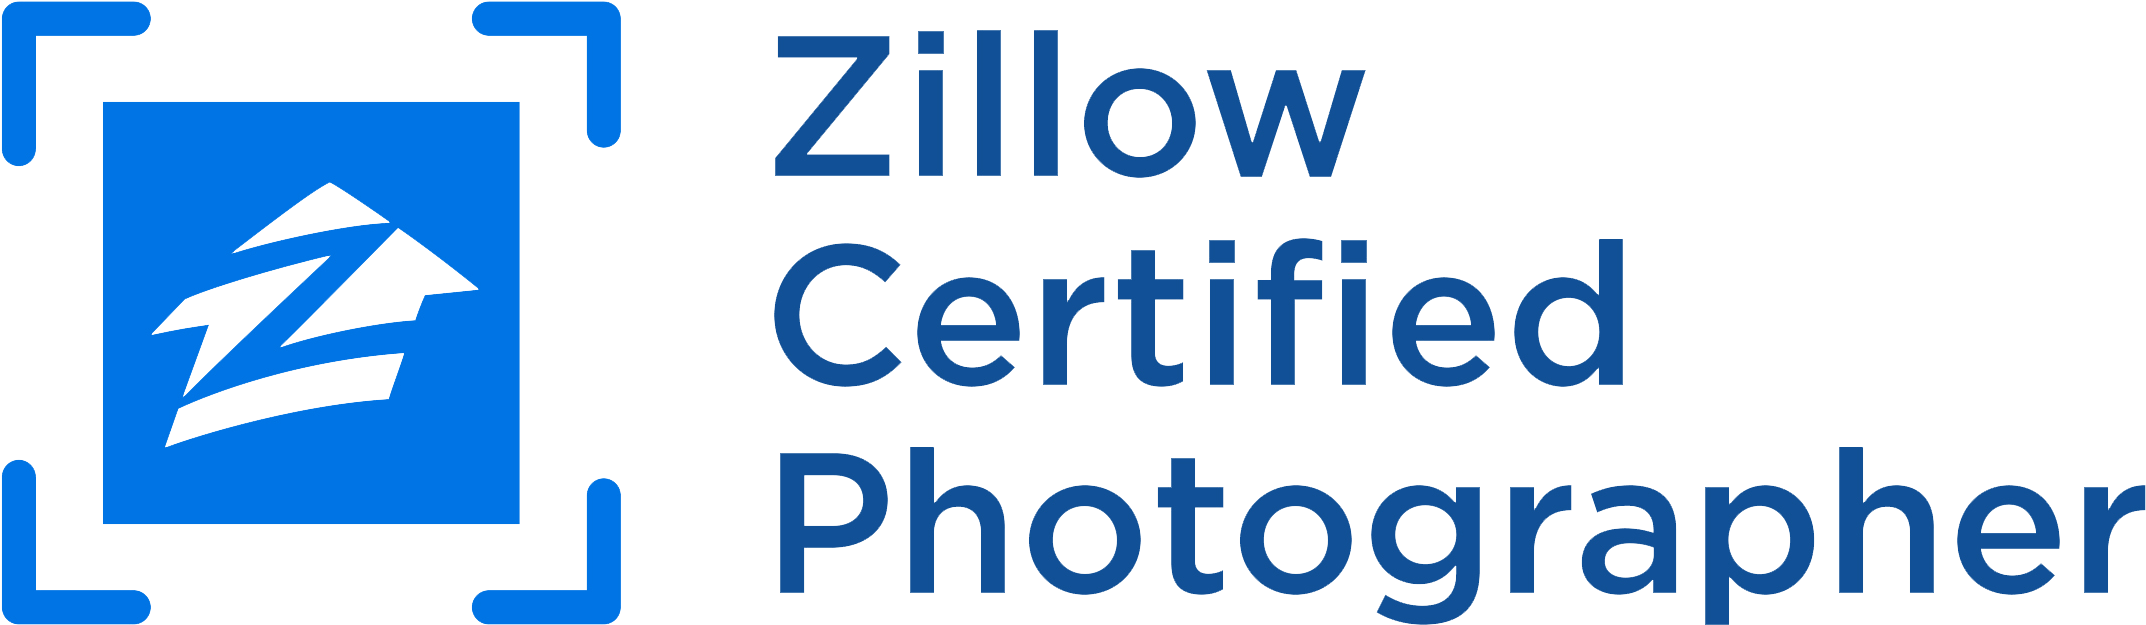 zillow certified photographer zillow.com partner